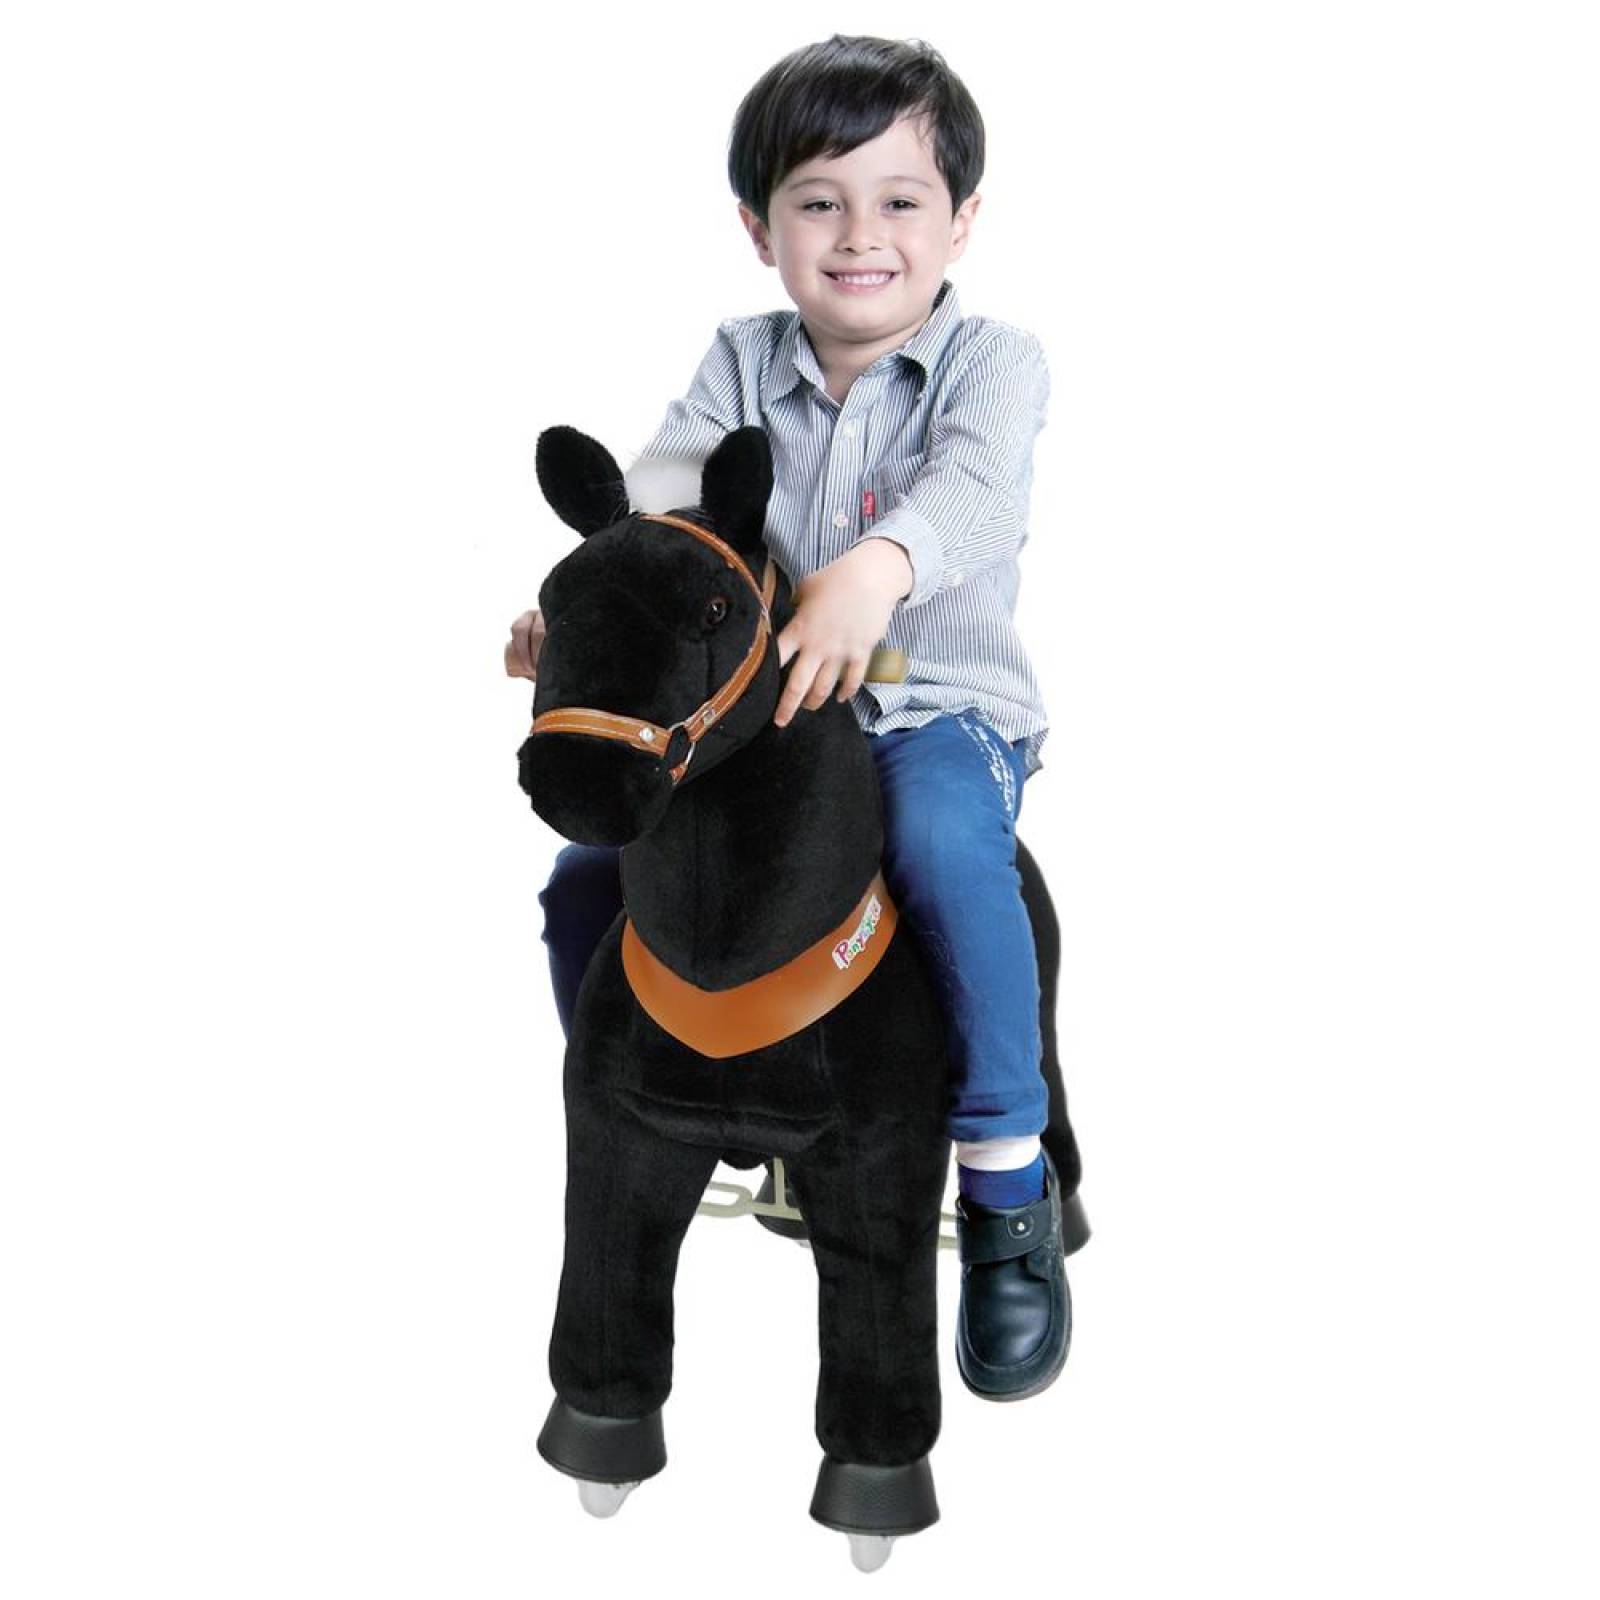 Caballito Montable De Empuje Pony Cycle Con Ruedas Juego Para Niños Chocolate Unitalla